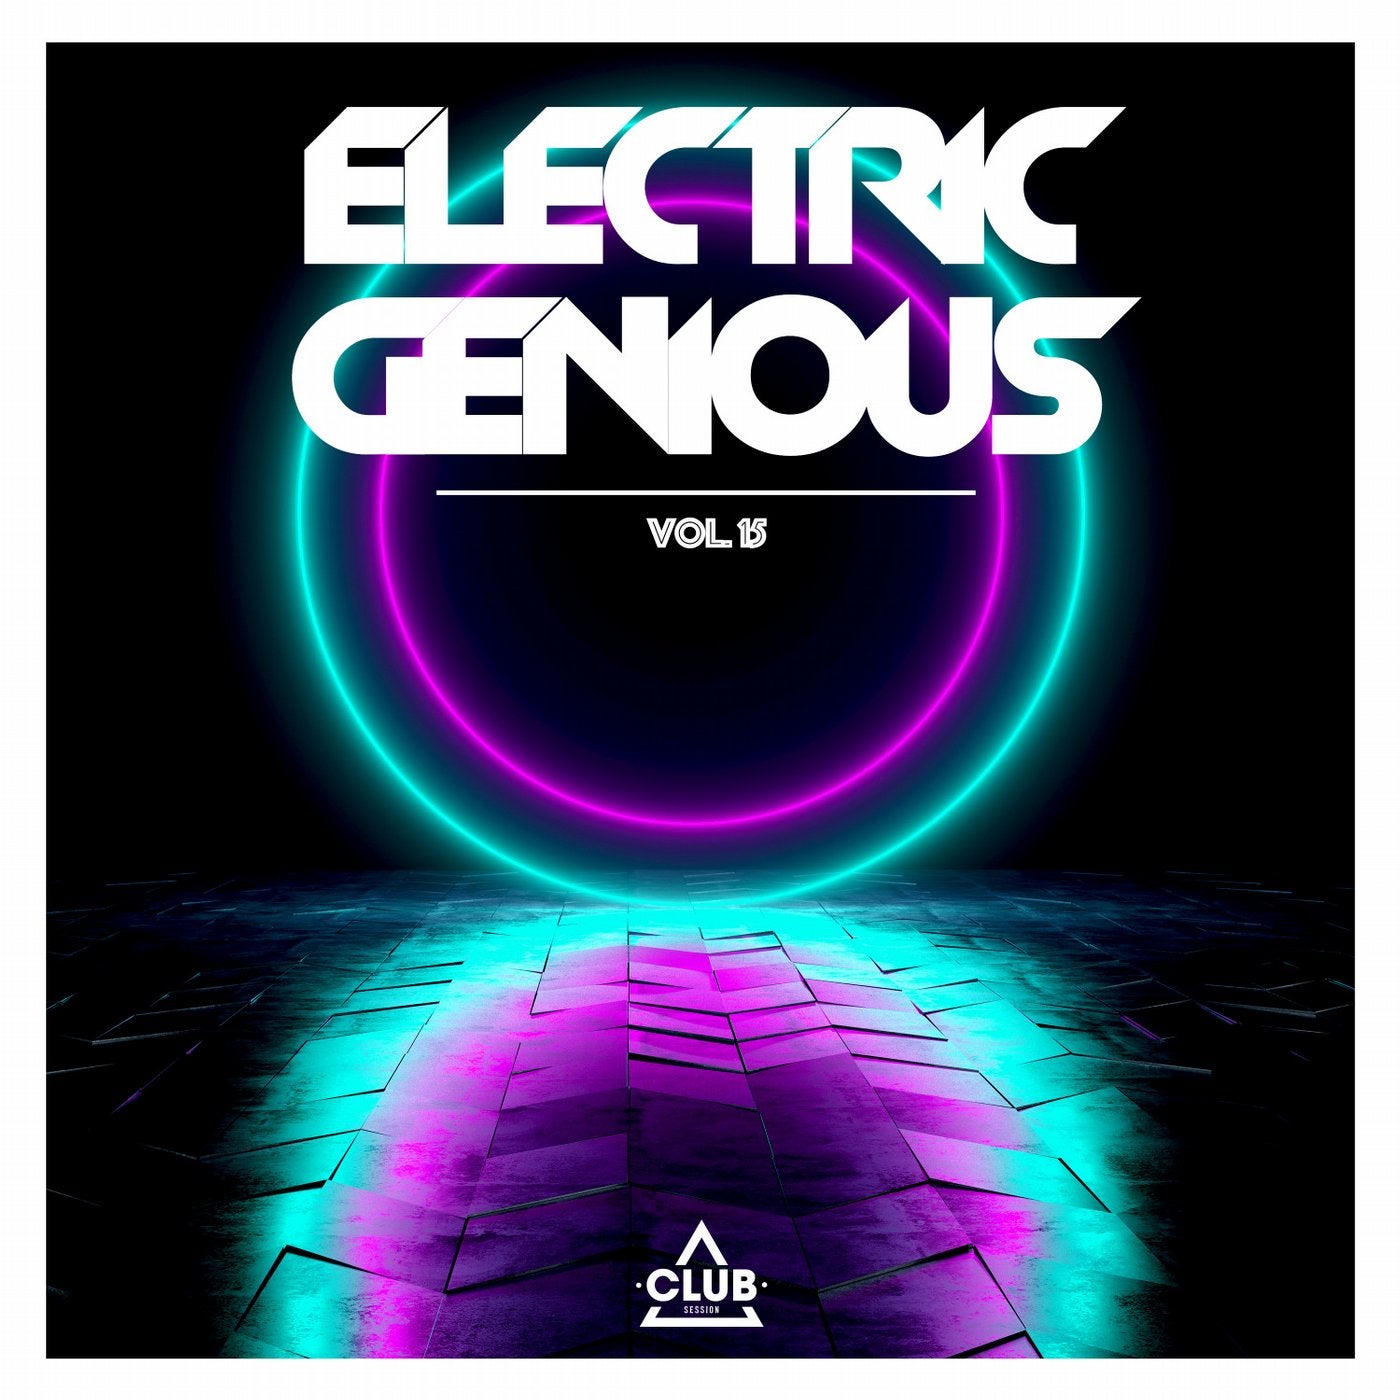 Electric Genious Vol. 15